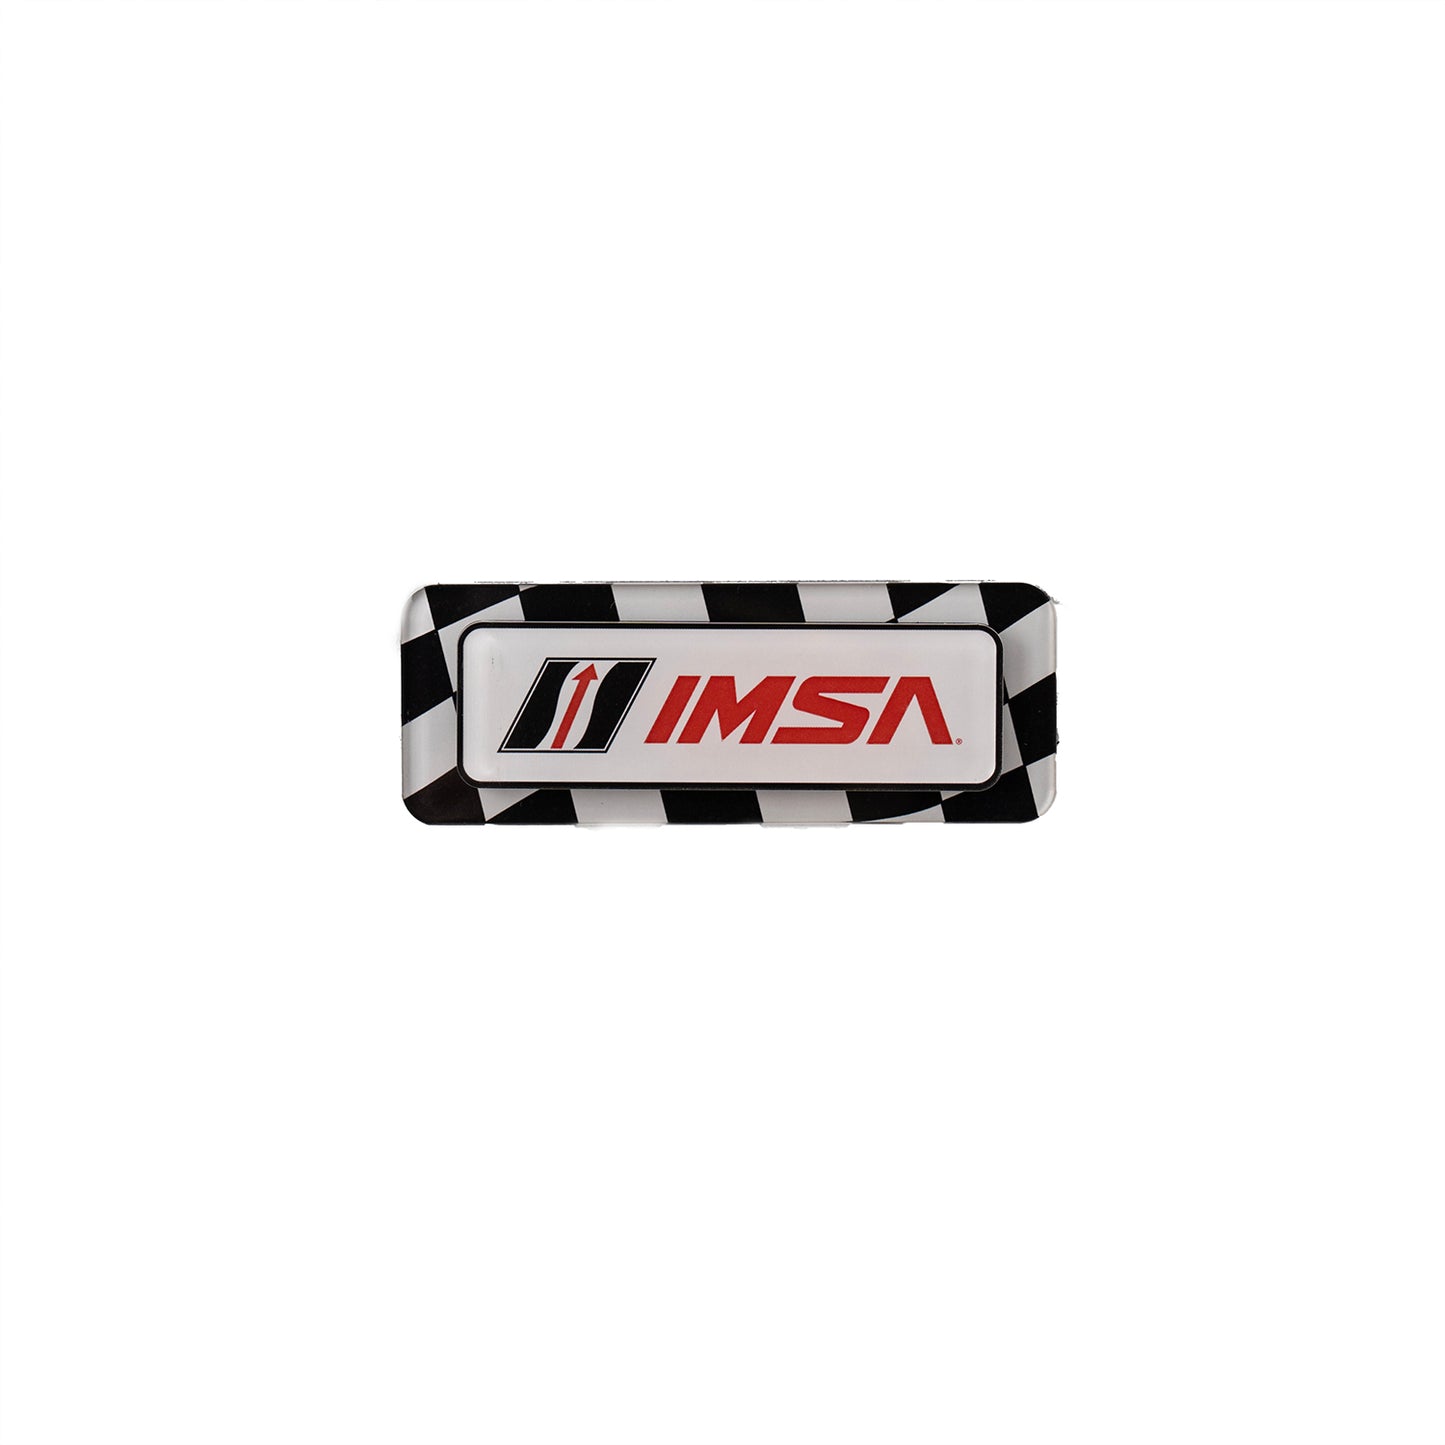 IMSA 3D Magnet